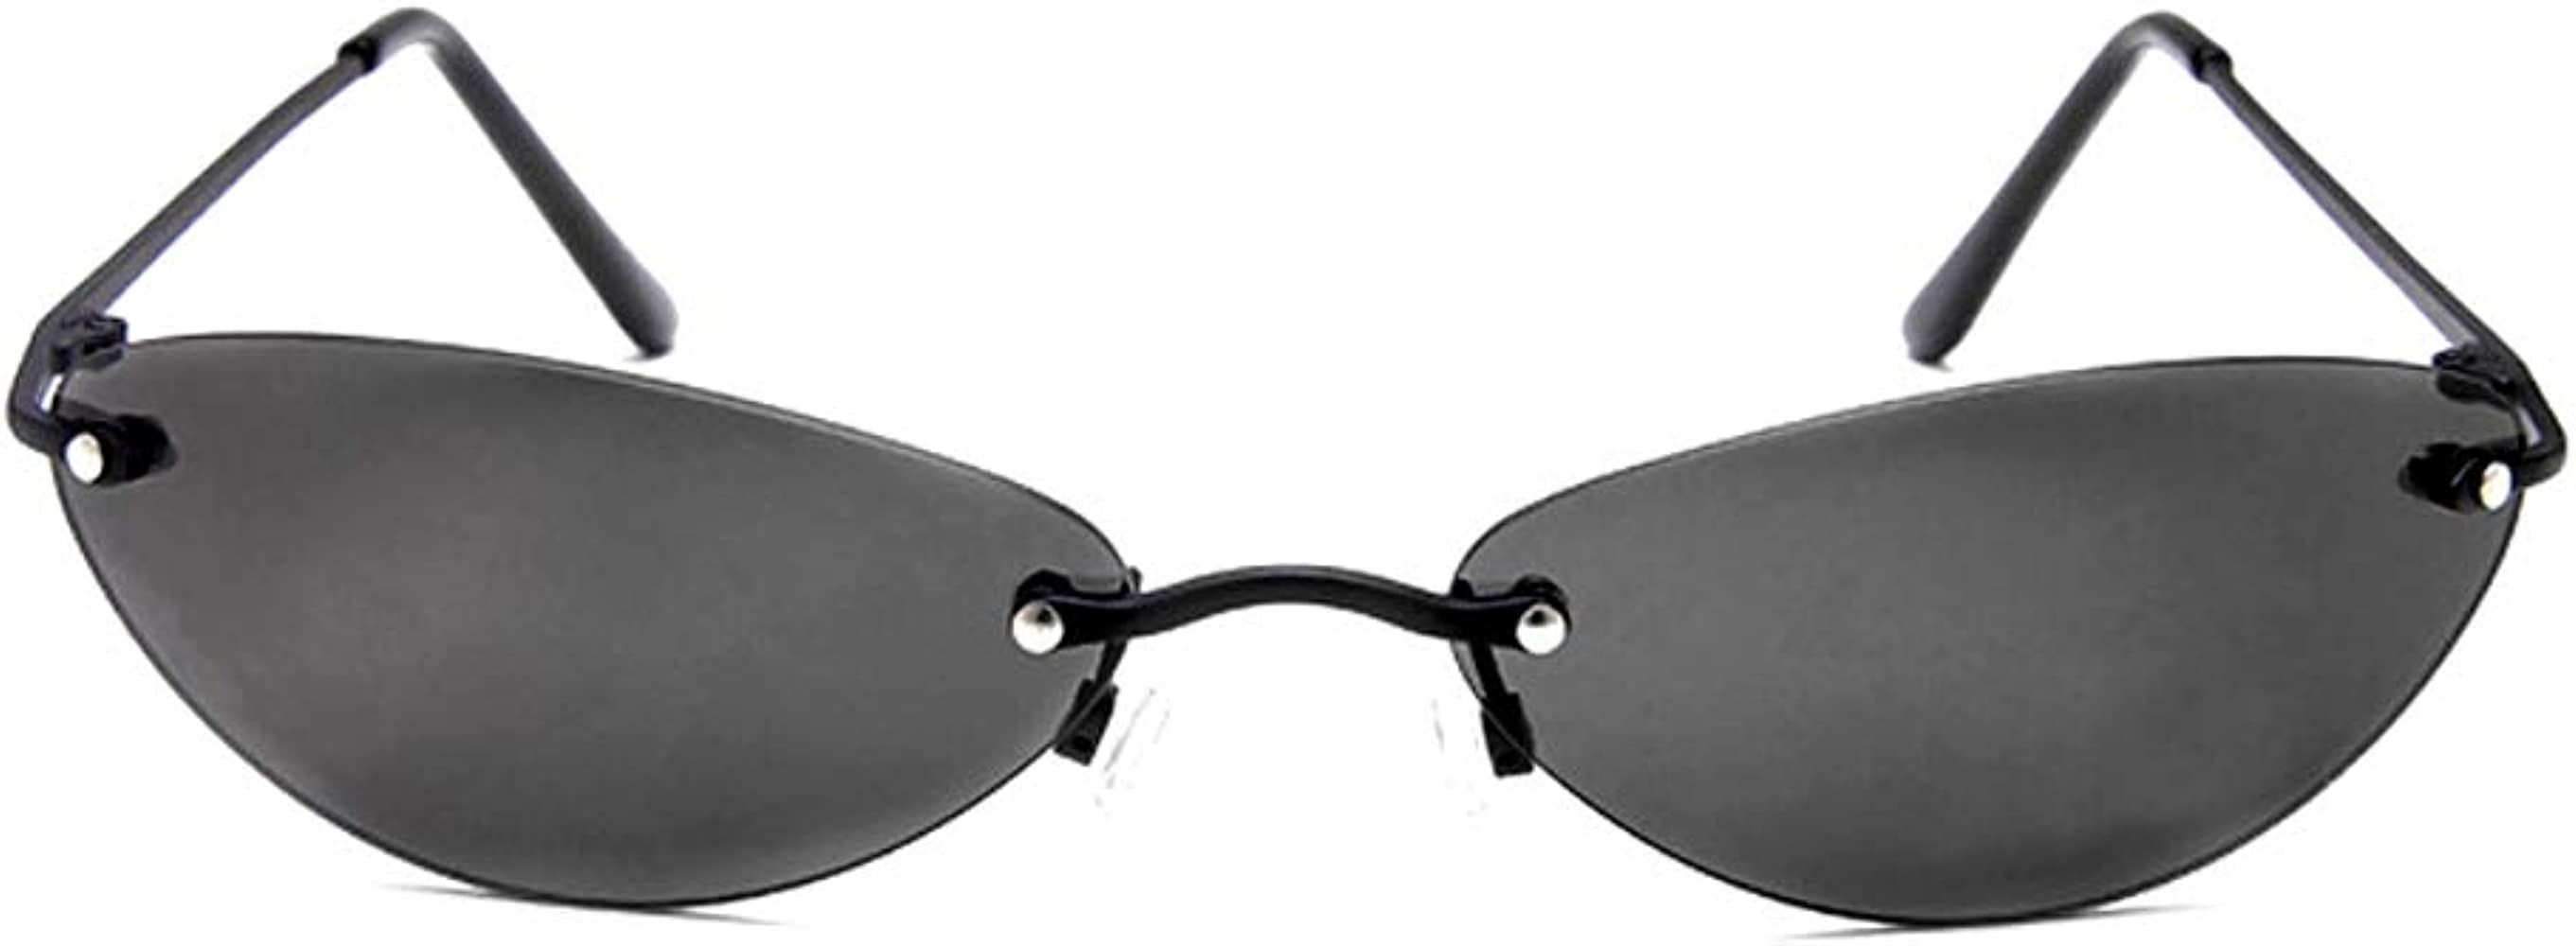 Polarized Matrix Morpheus Sunglasses Glasses men 13.9 g Ultralight Rimless | Amazon (US)